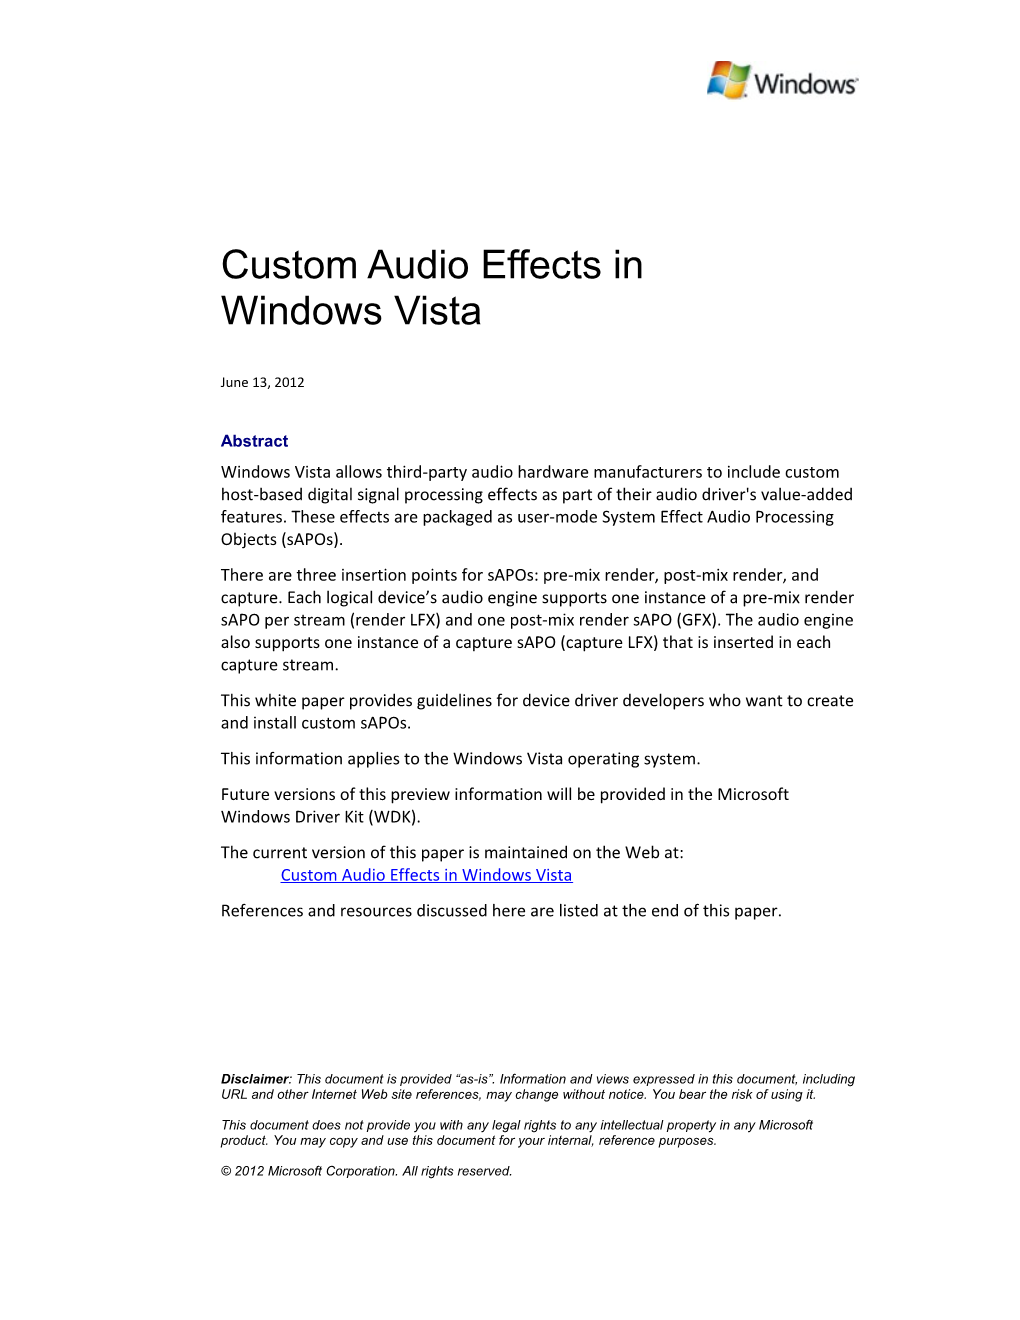 Custom Audio Effects in Windows Vista - 1